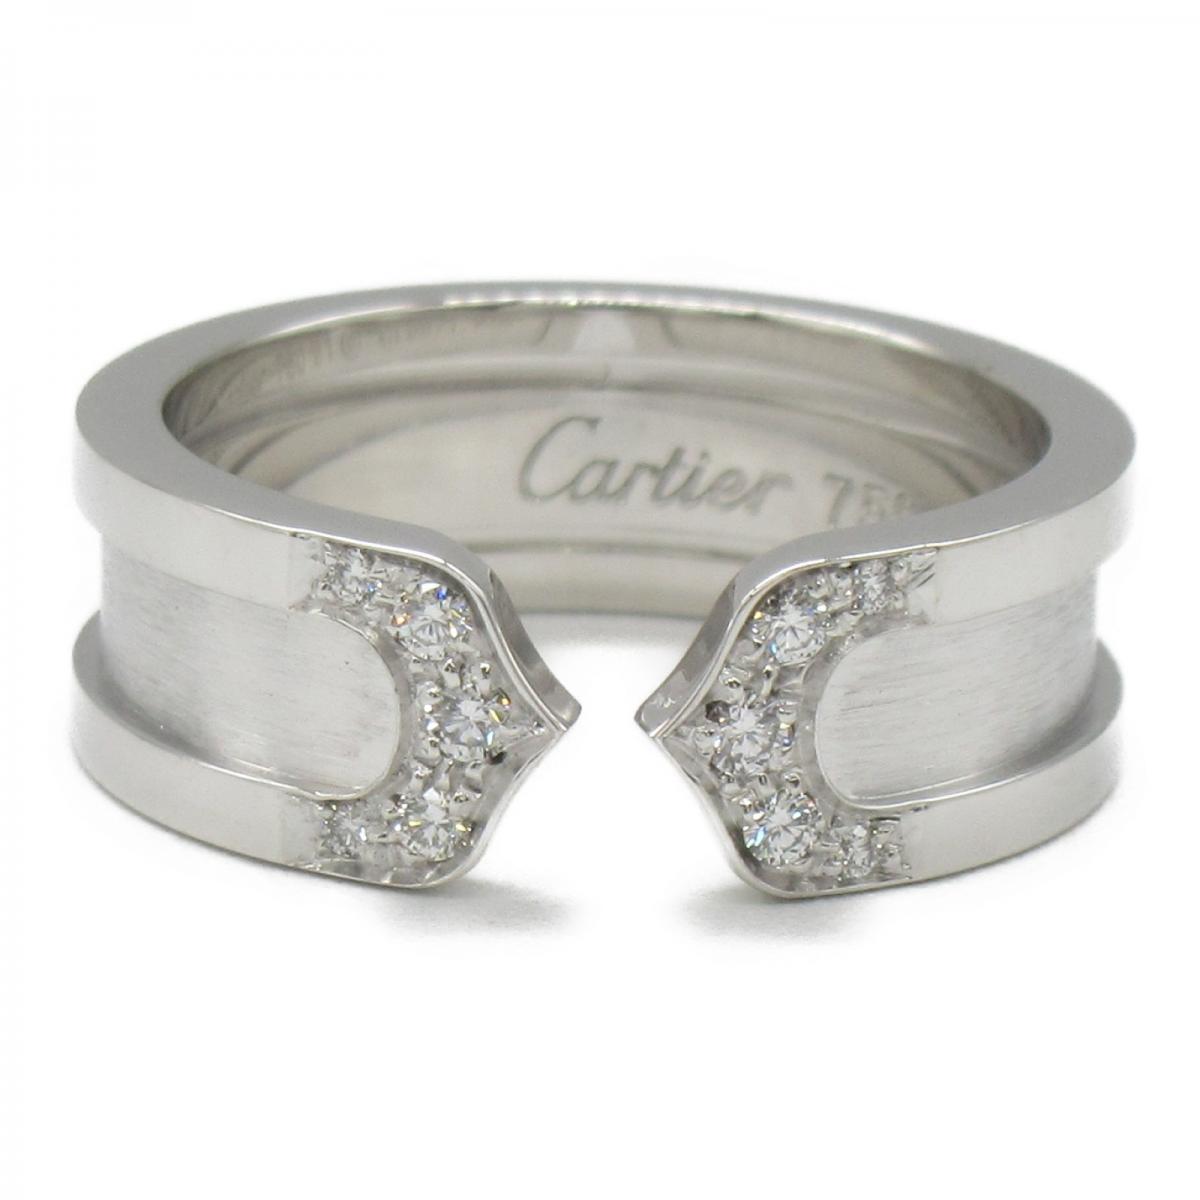 Double C de Cartier Ring